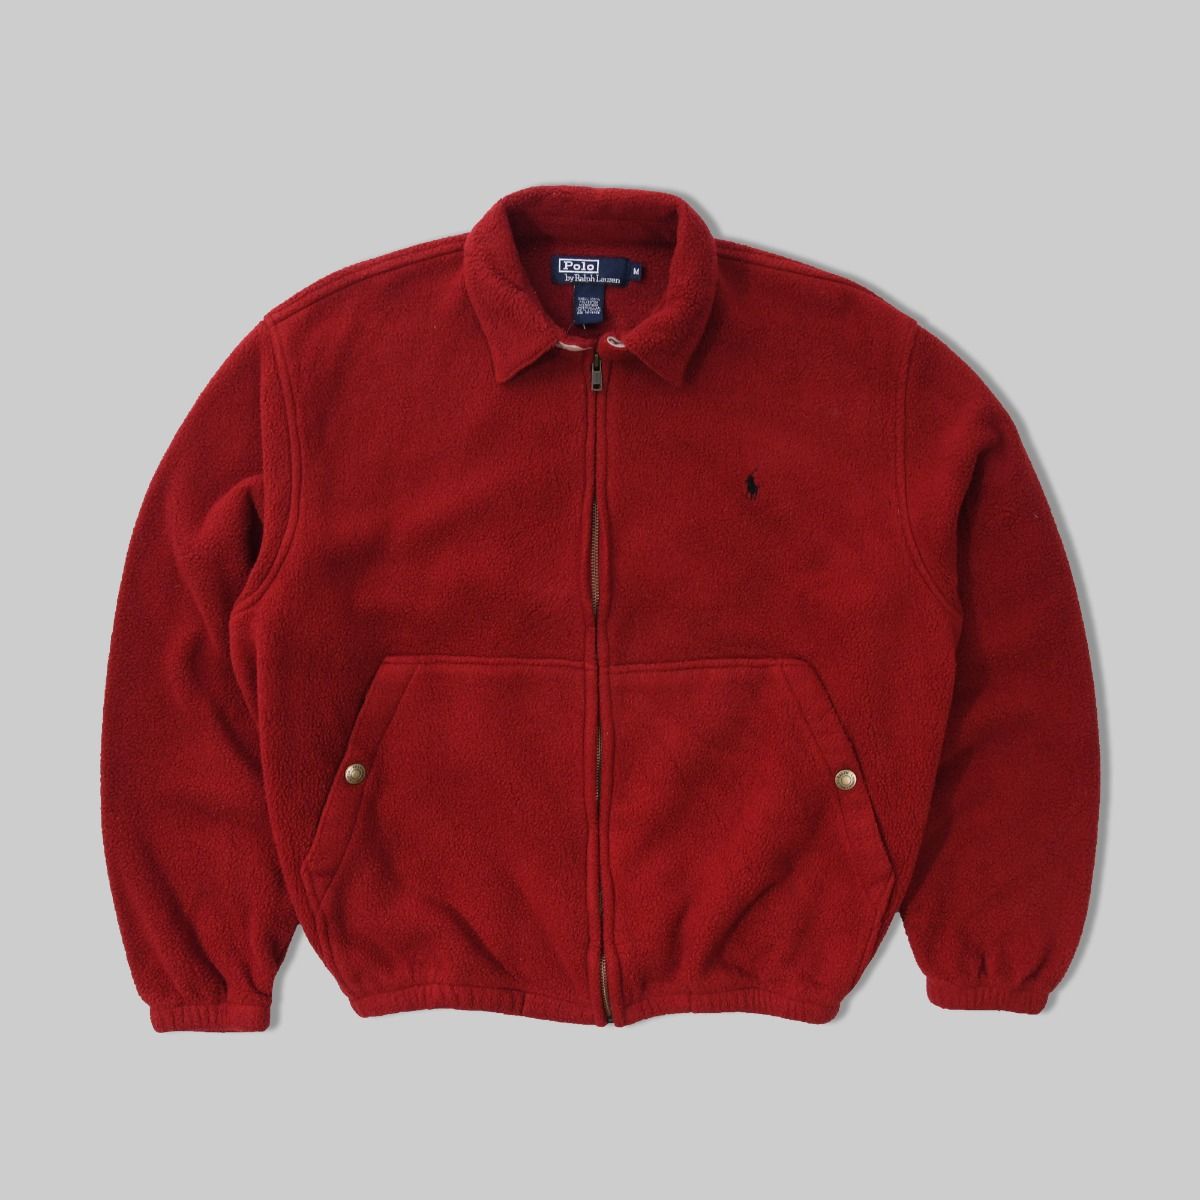 Polo Ralph Lauren 1990s Fleece Harrington Jacket